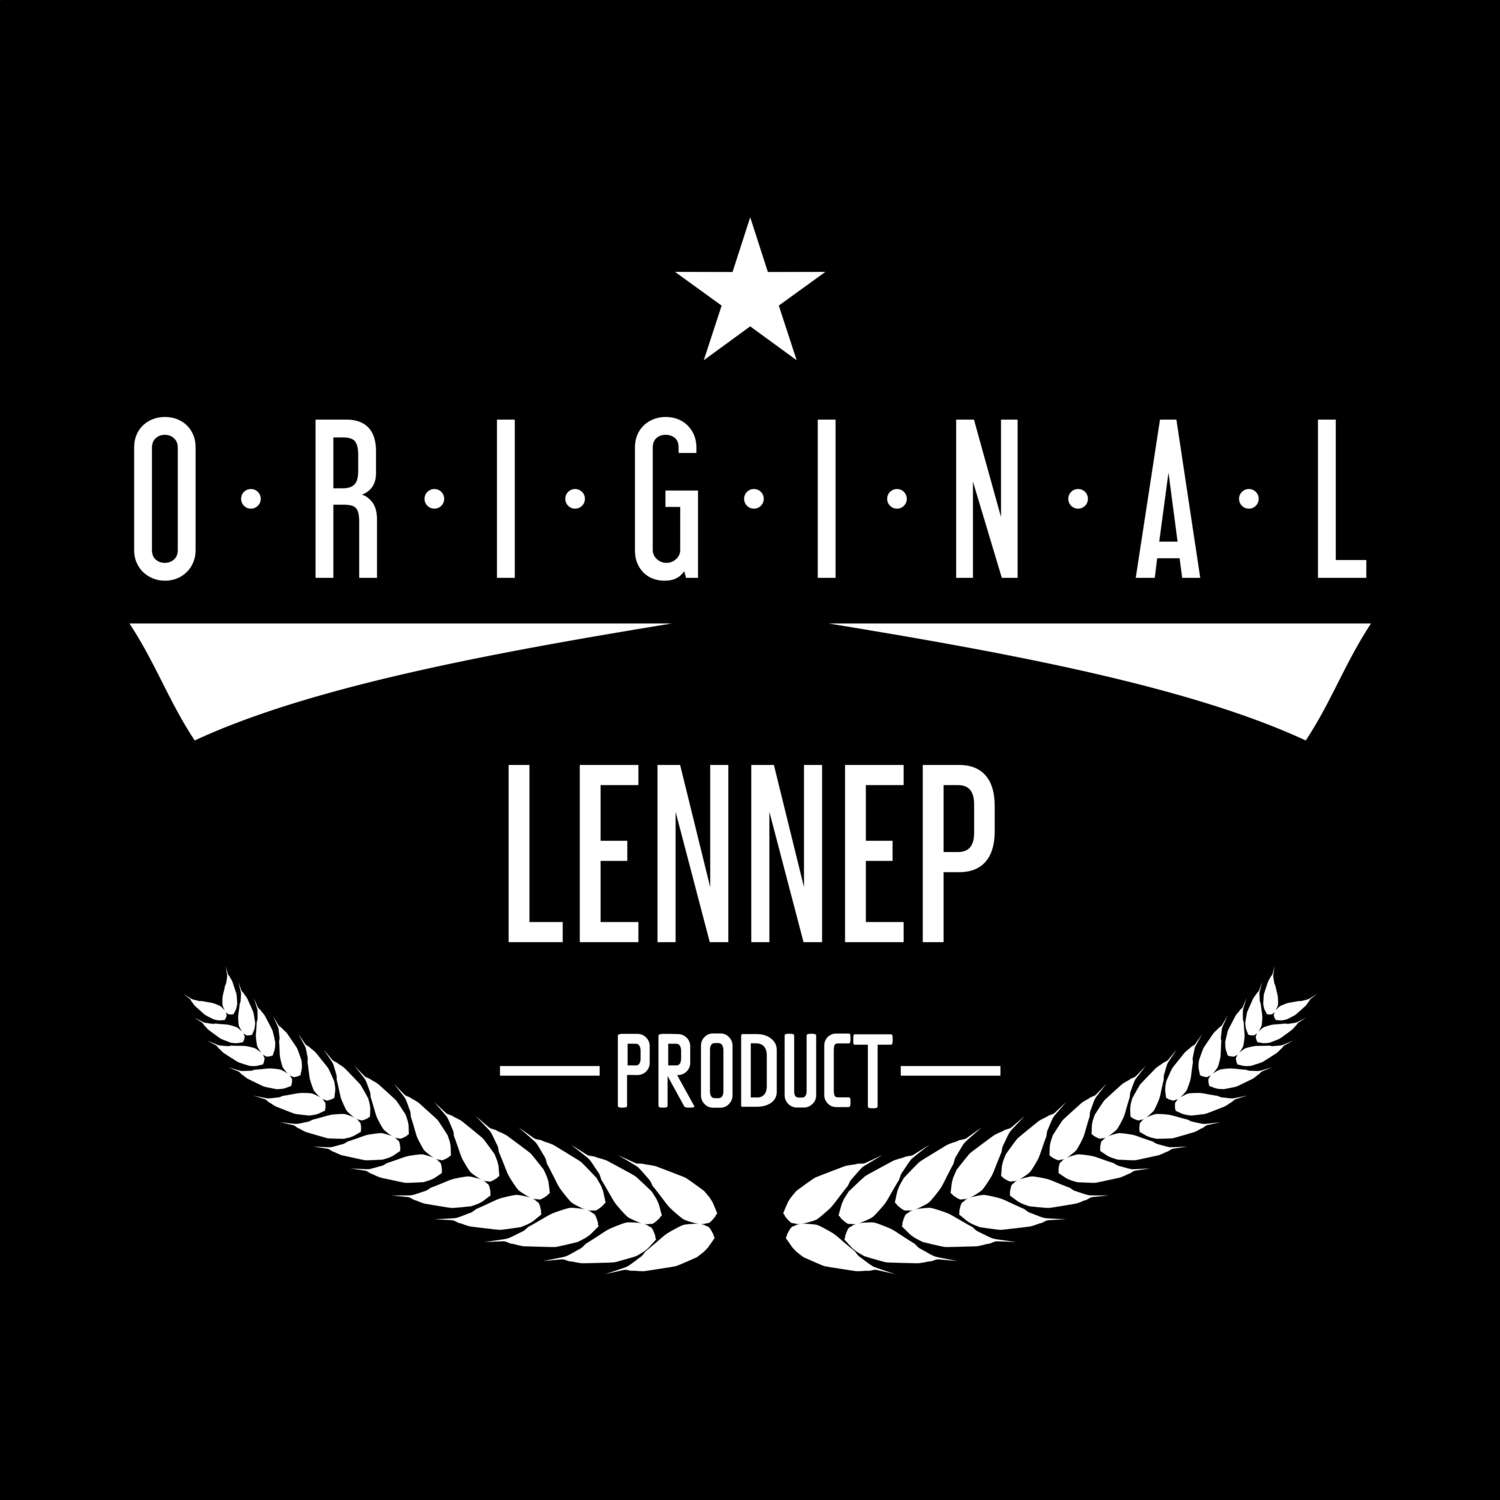 Lennep T-Shirt »Original Product«